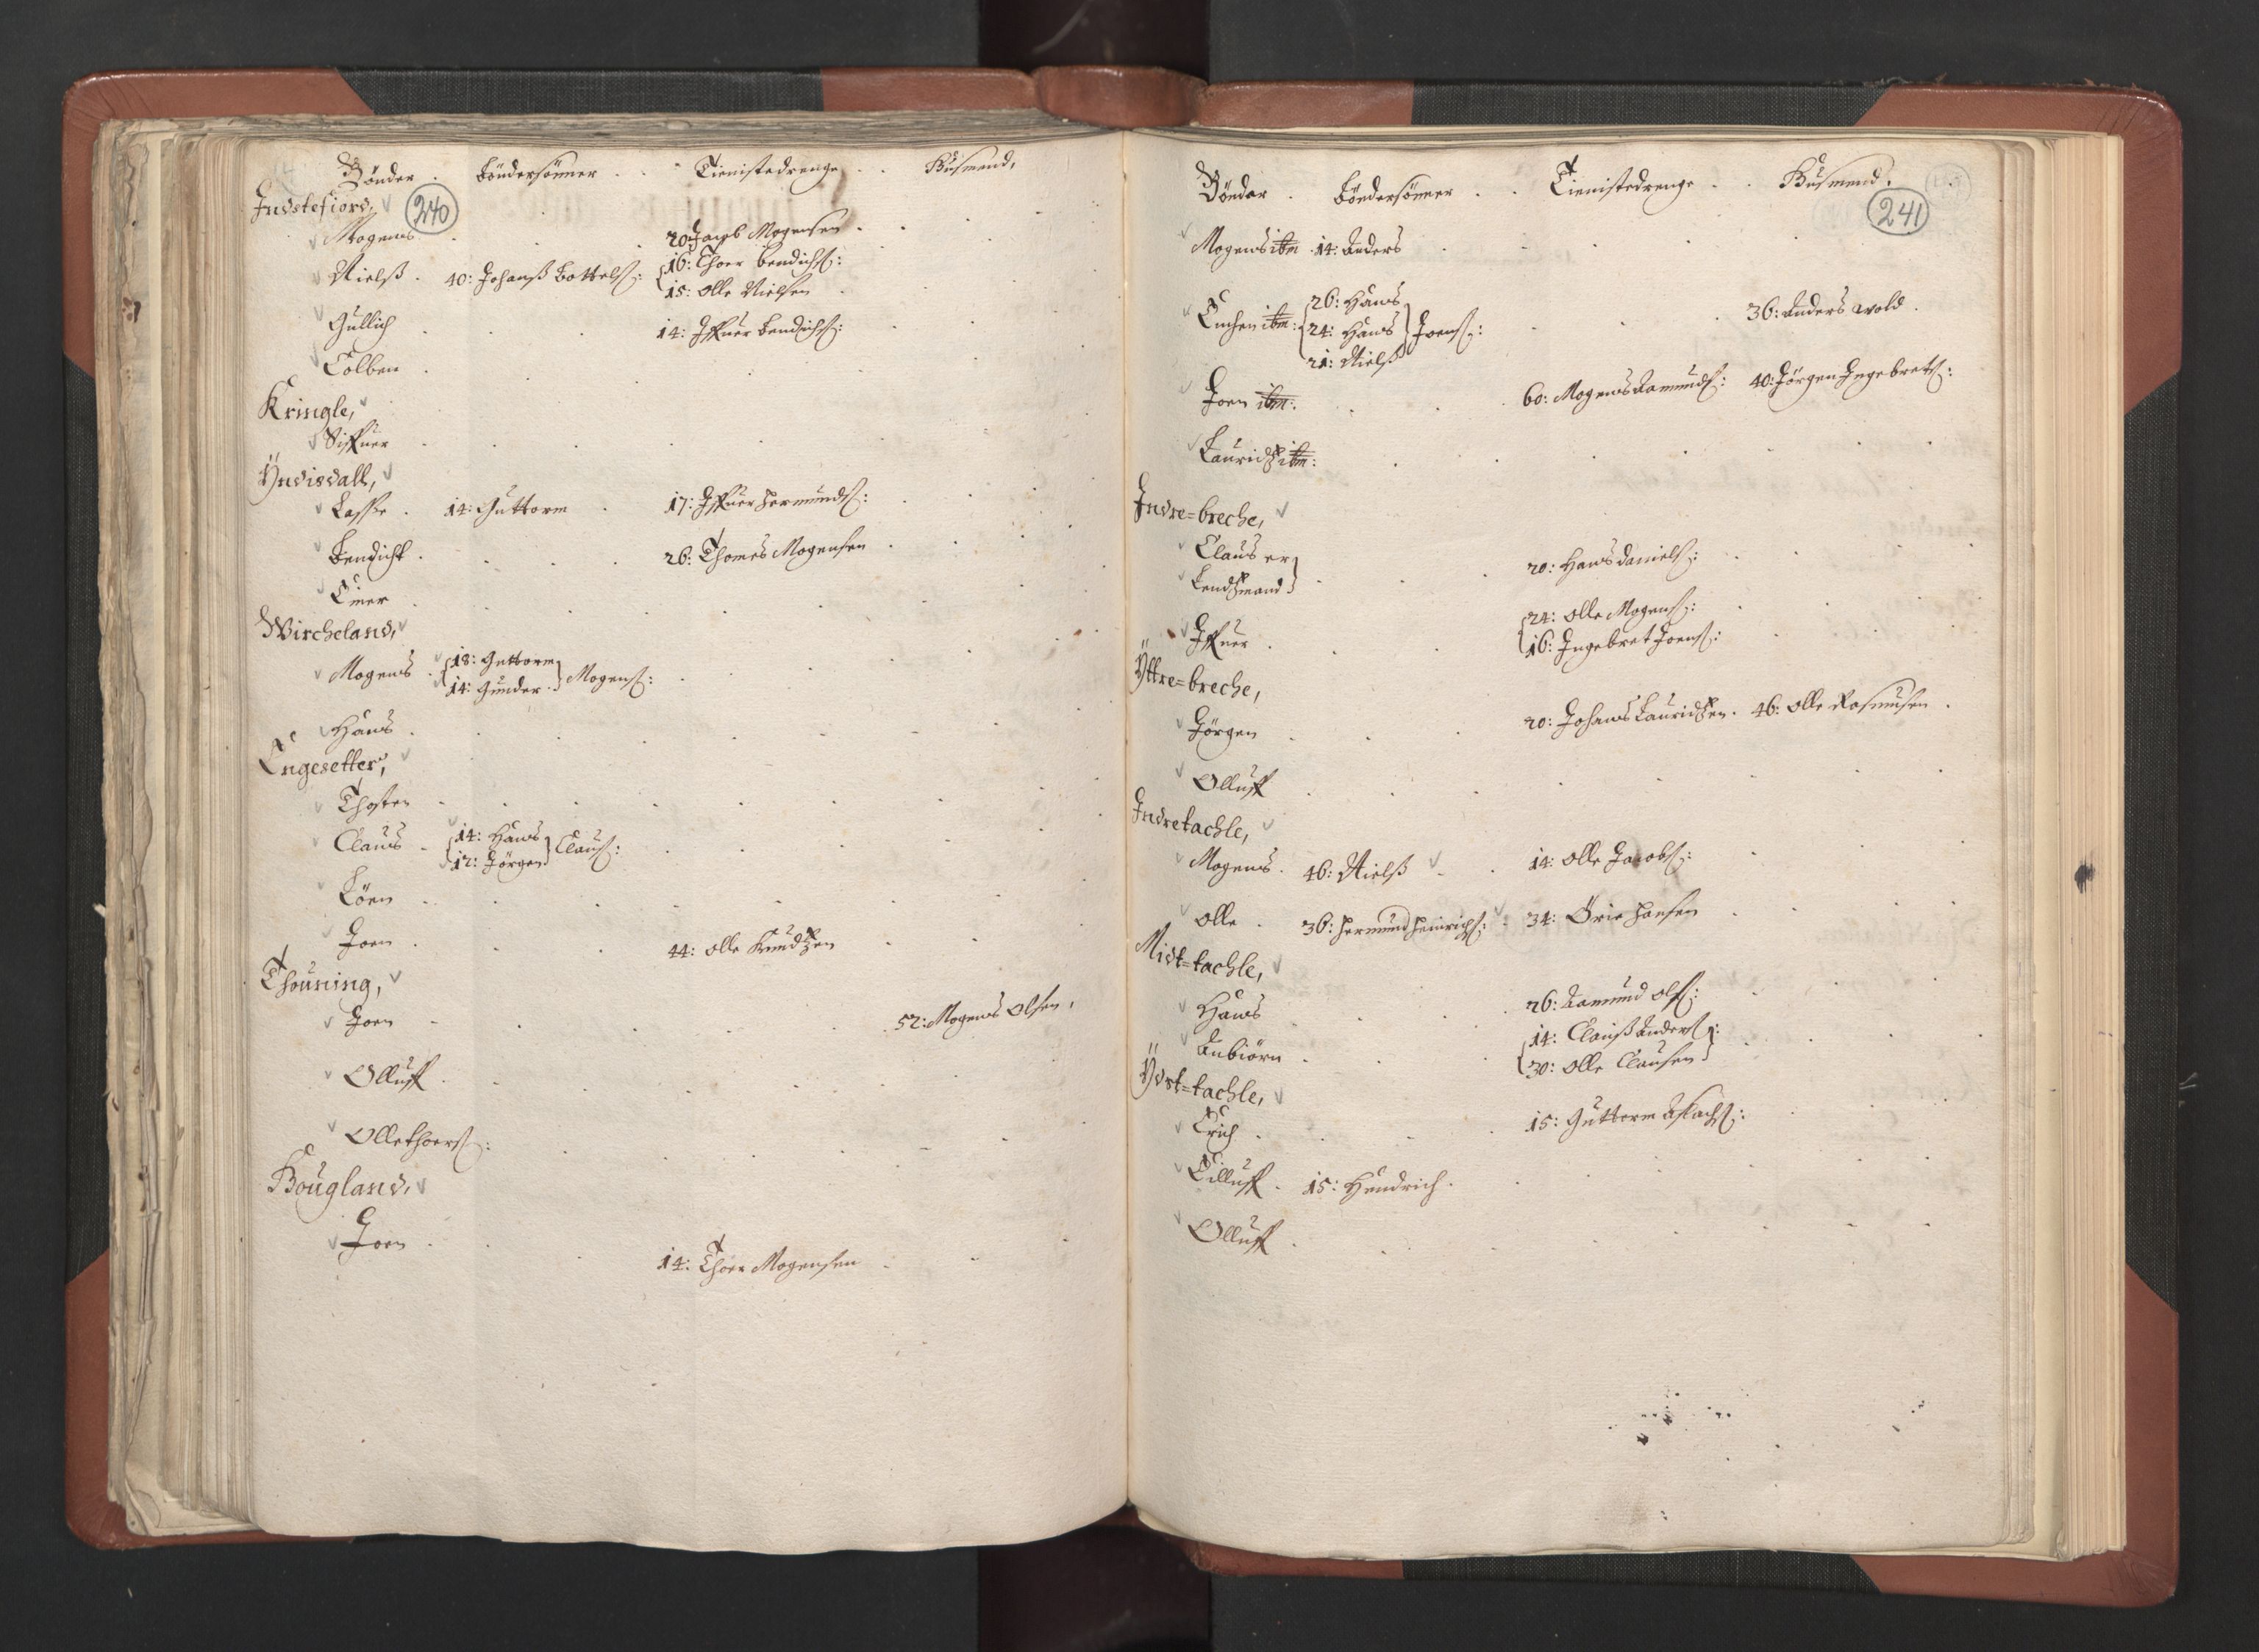 RA, Fogdenes og sorenskrivernes manntall 1664-1666, nr. 14: Hardanger len, Ytre Sogn fogderi og Indre Sogn fogderi, 1664-1665, s. 240-241